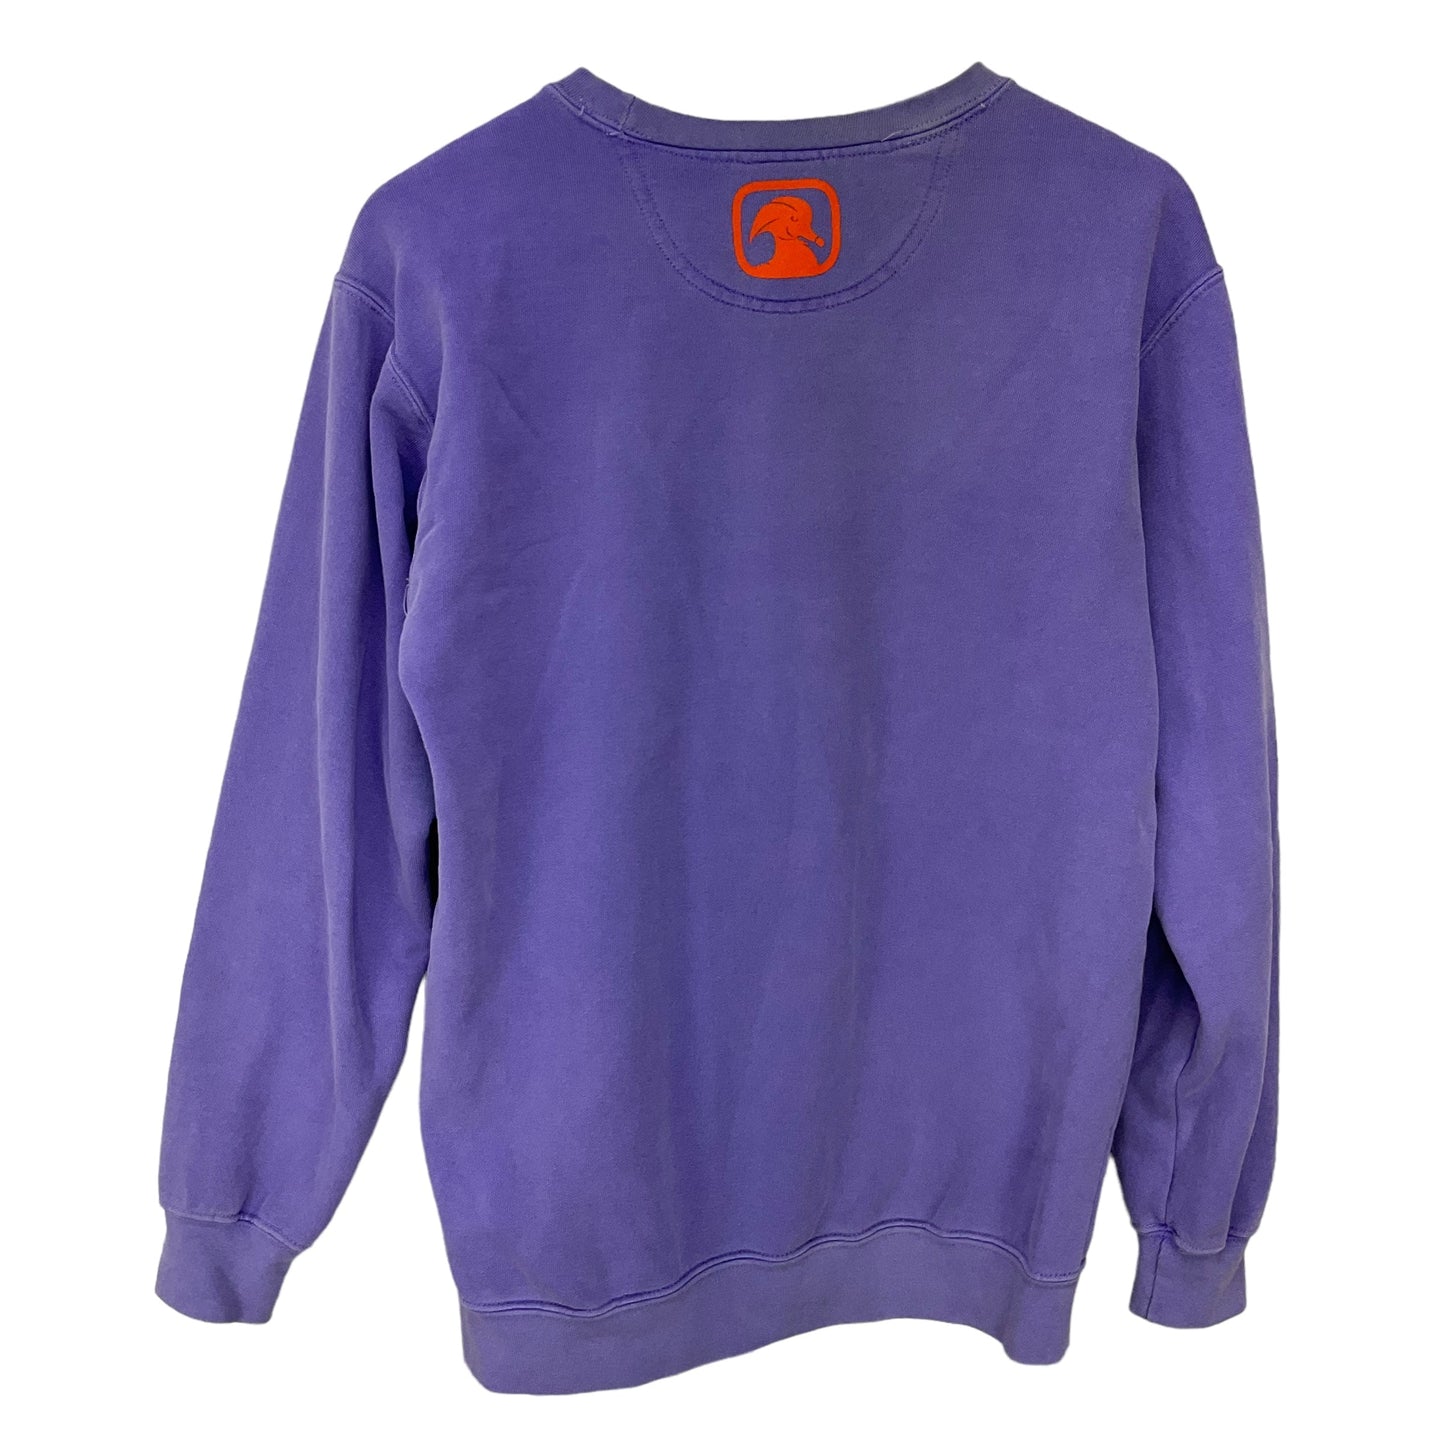 Sweatshirt Crewneck By Comfort Colors  Size: S